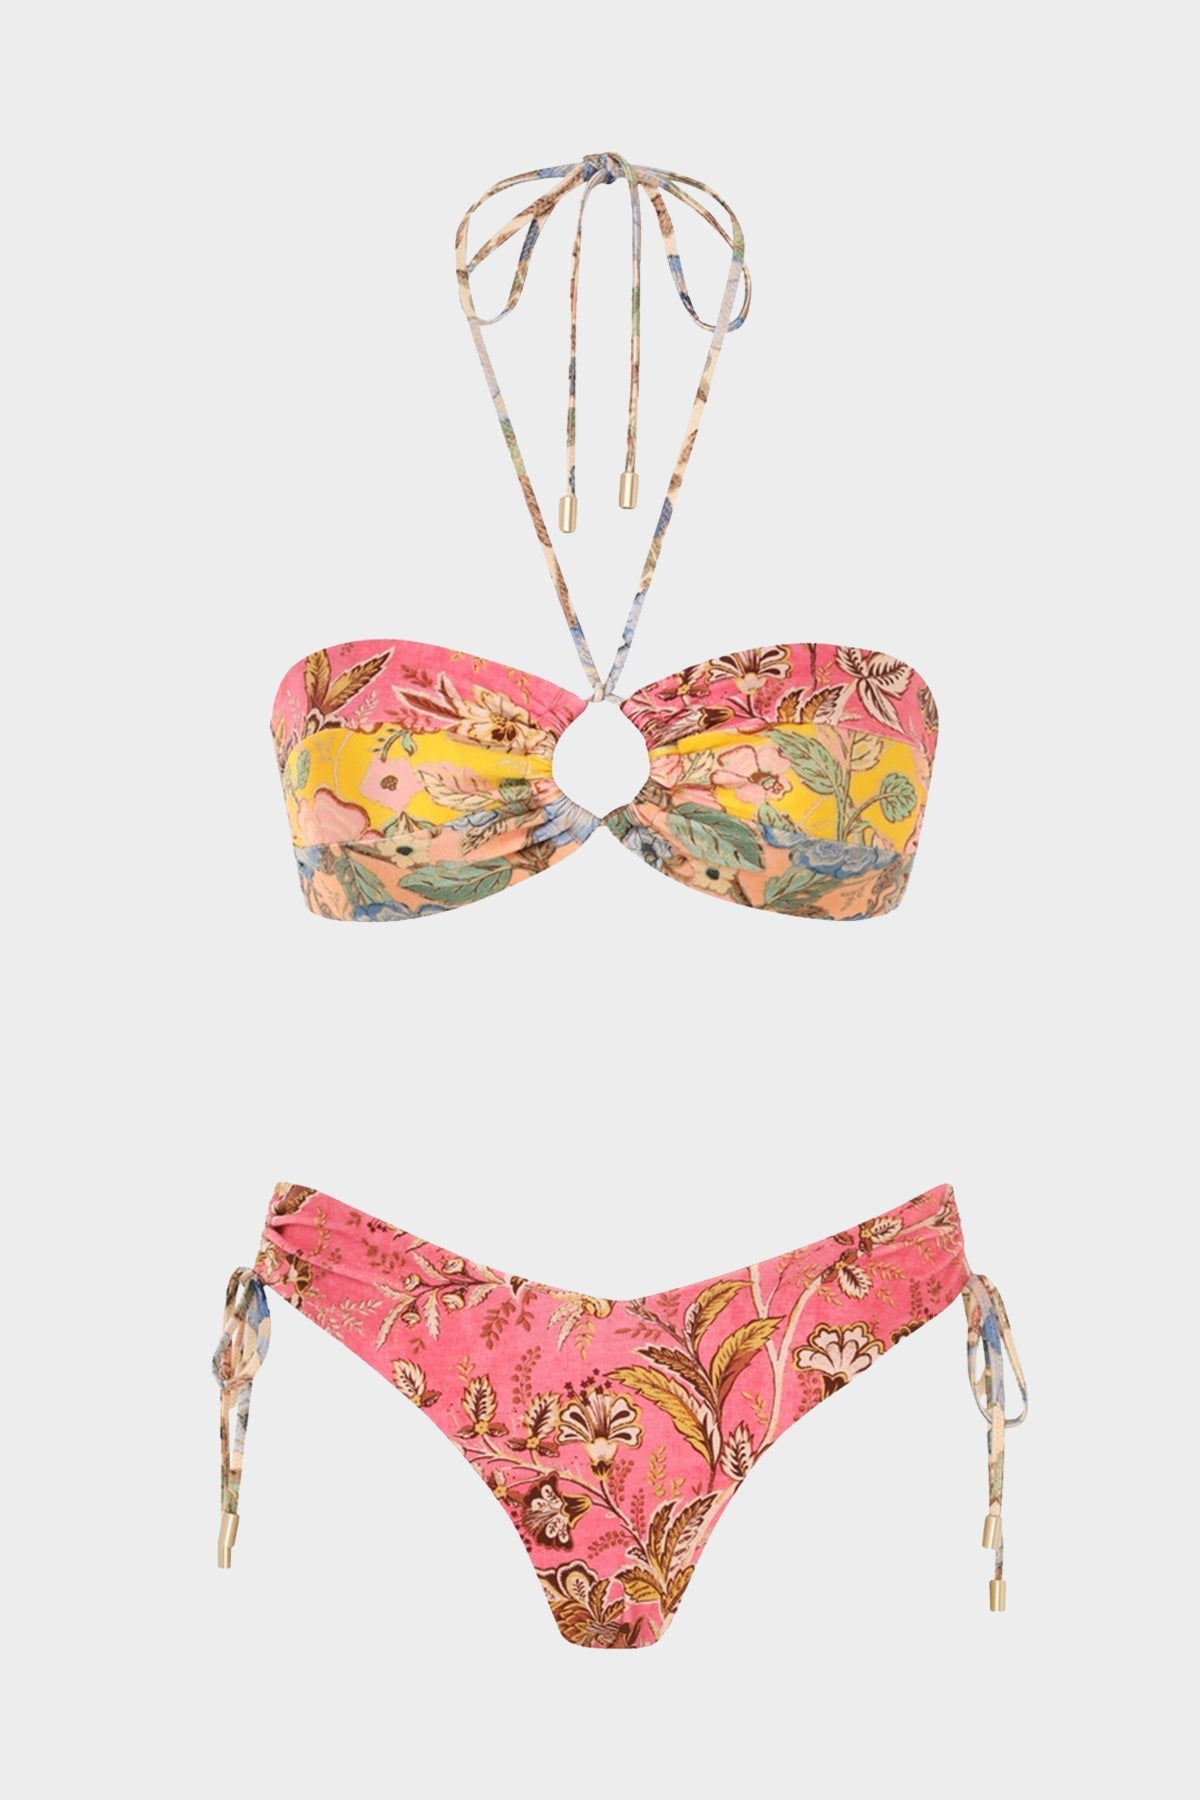 Junie Panelled Halter Bikini Set in Spliced - shop-olivia.com